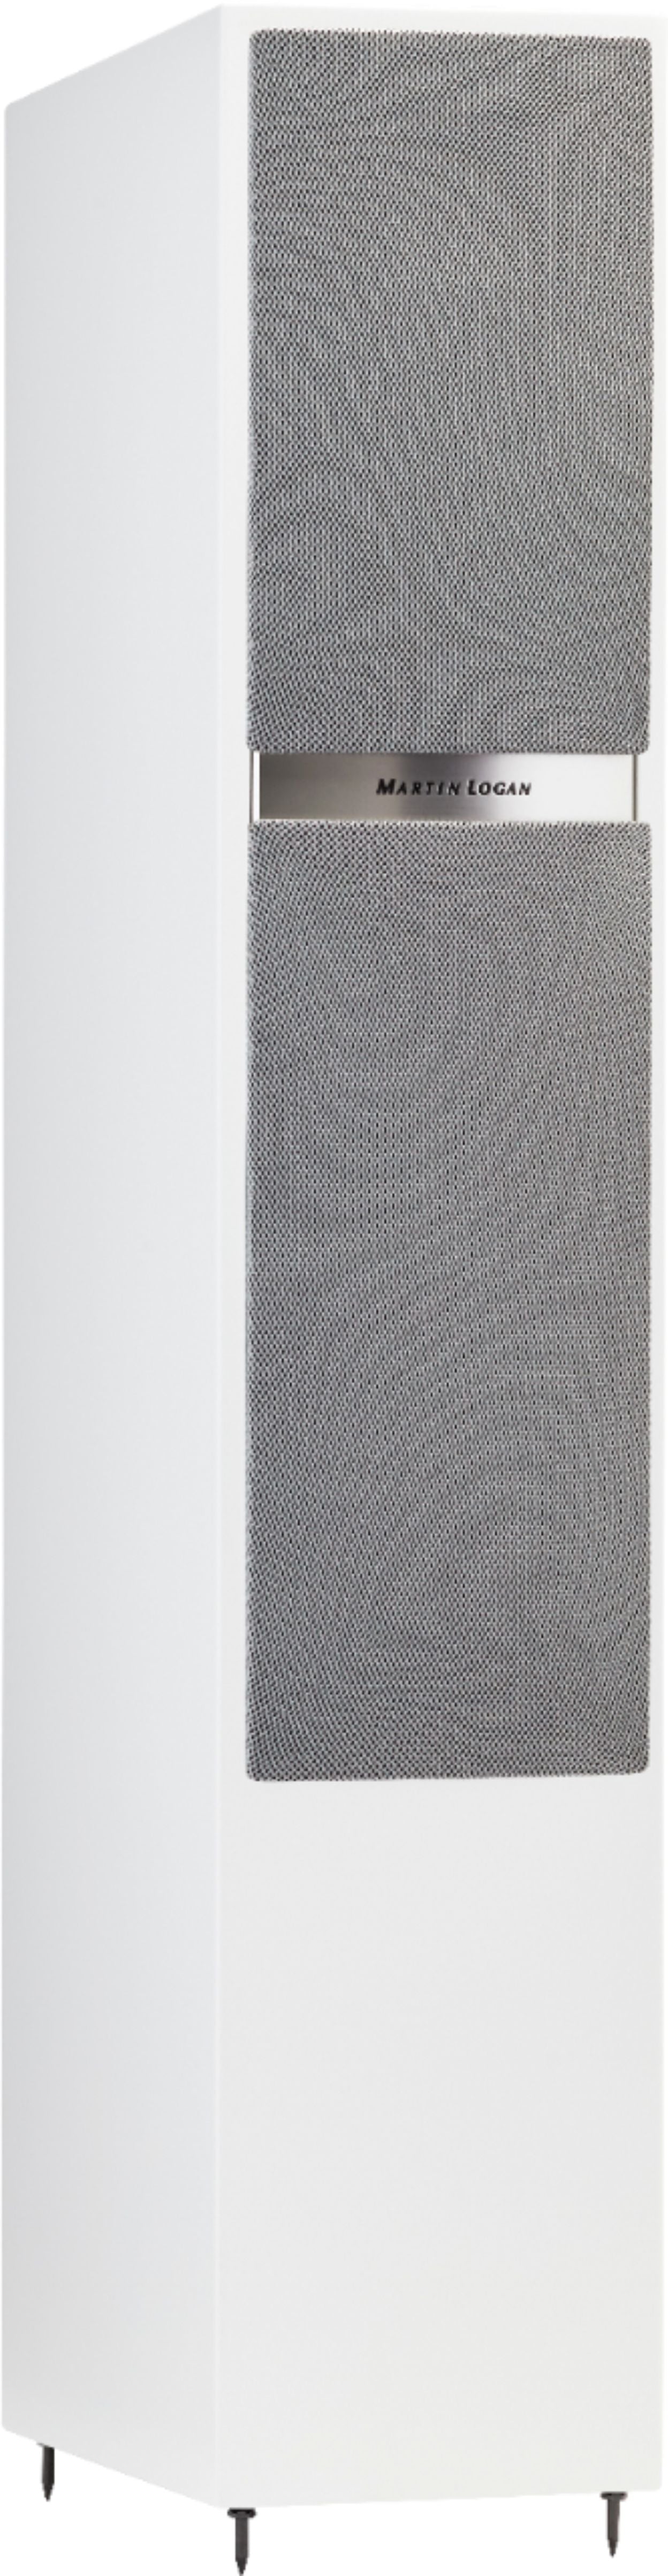 MartinLogan - Motion Dual 5-1/2" Passive 2.5-Way Floor Speaker (Each) - Matte White